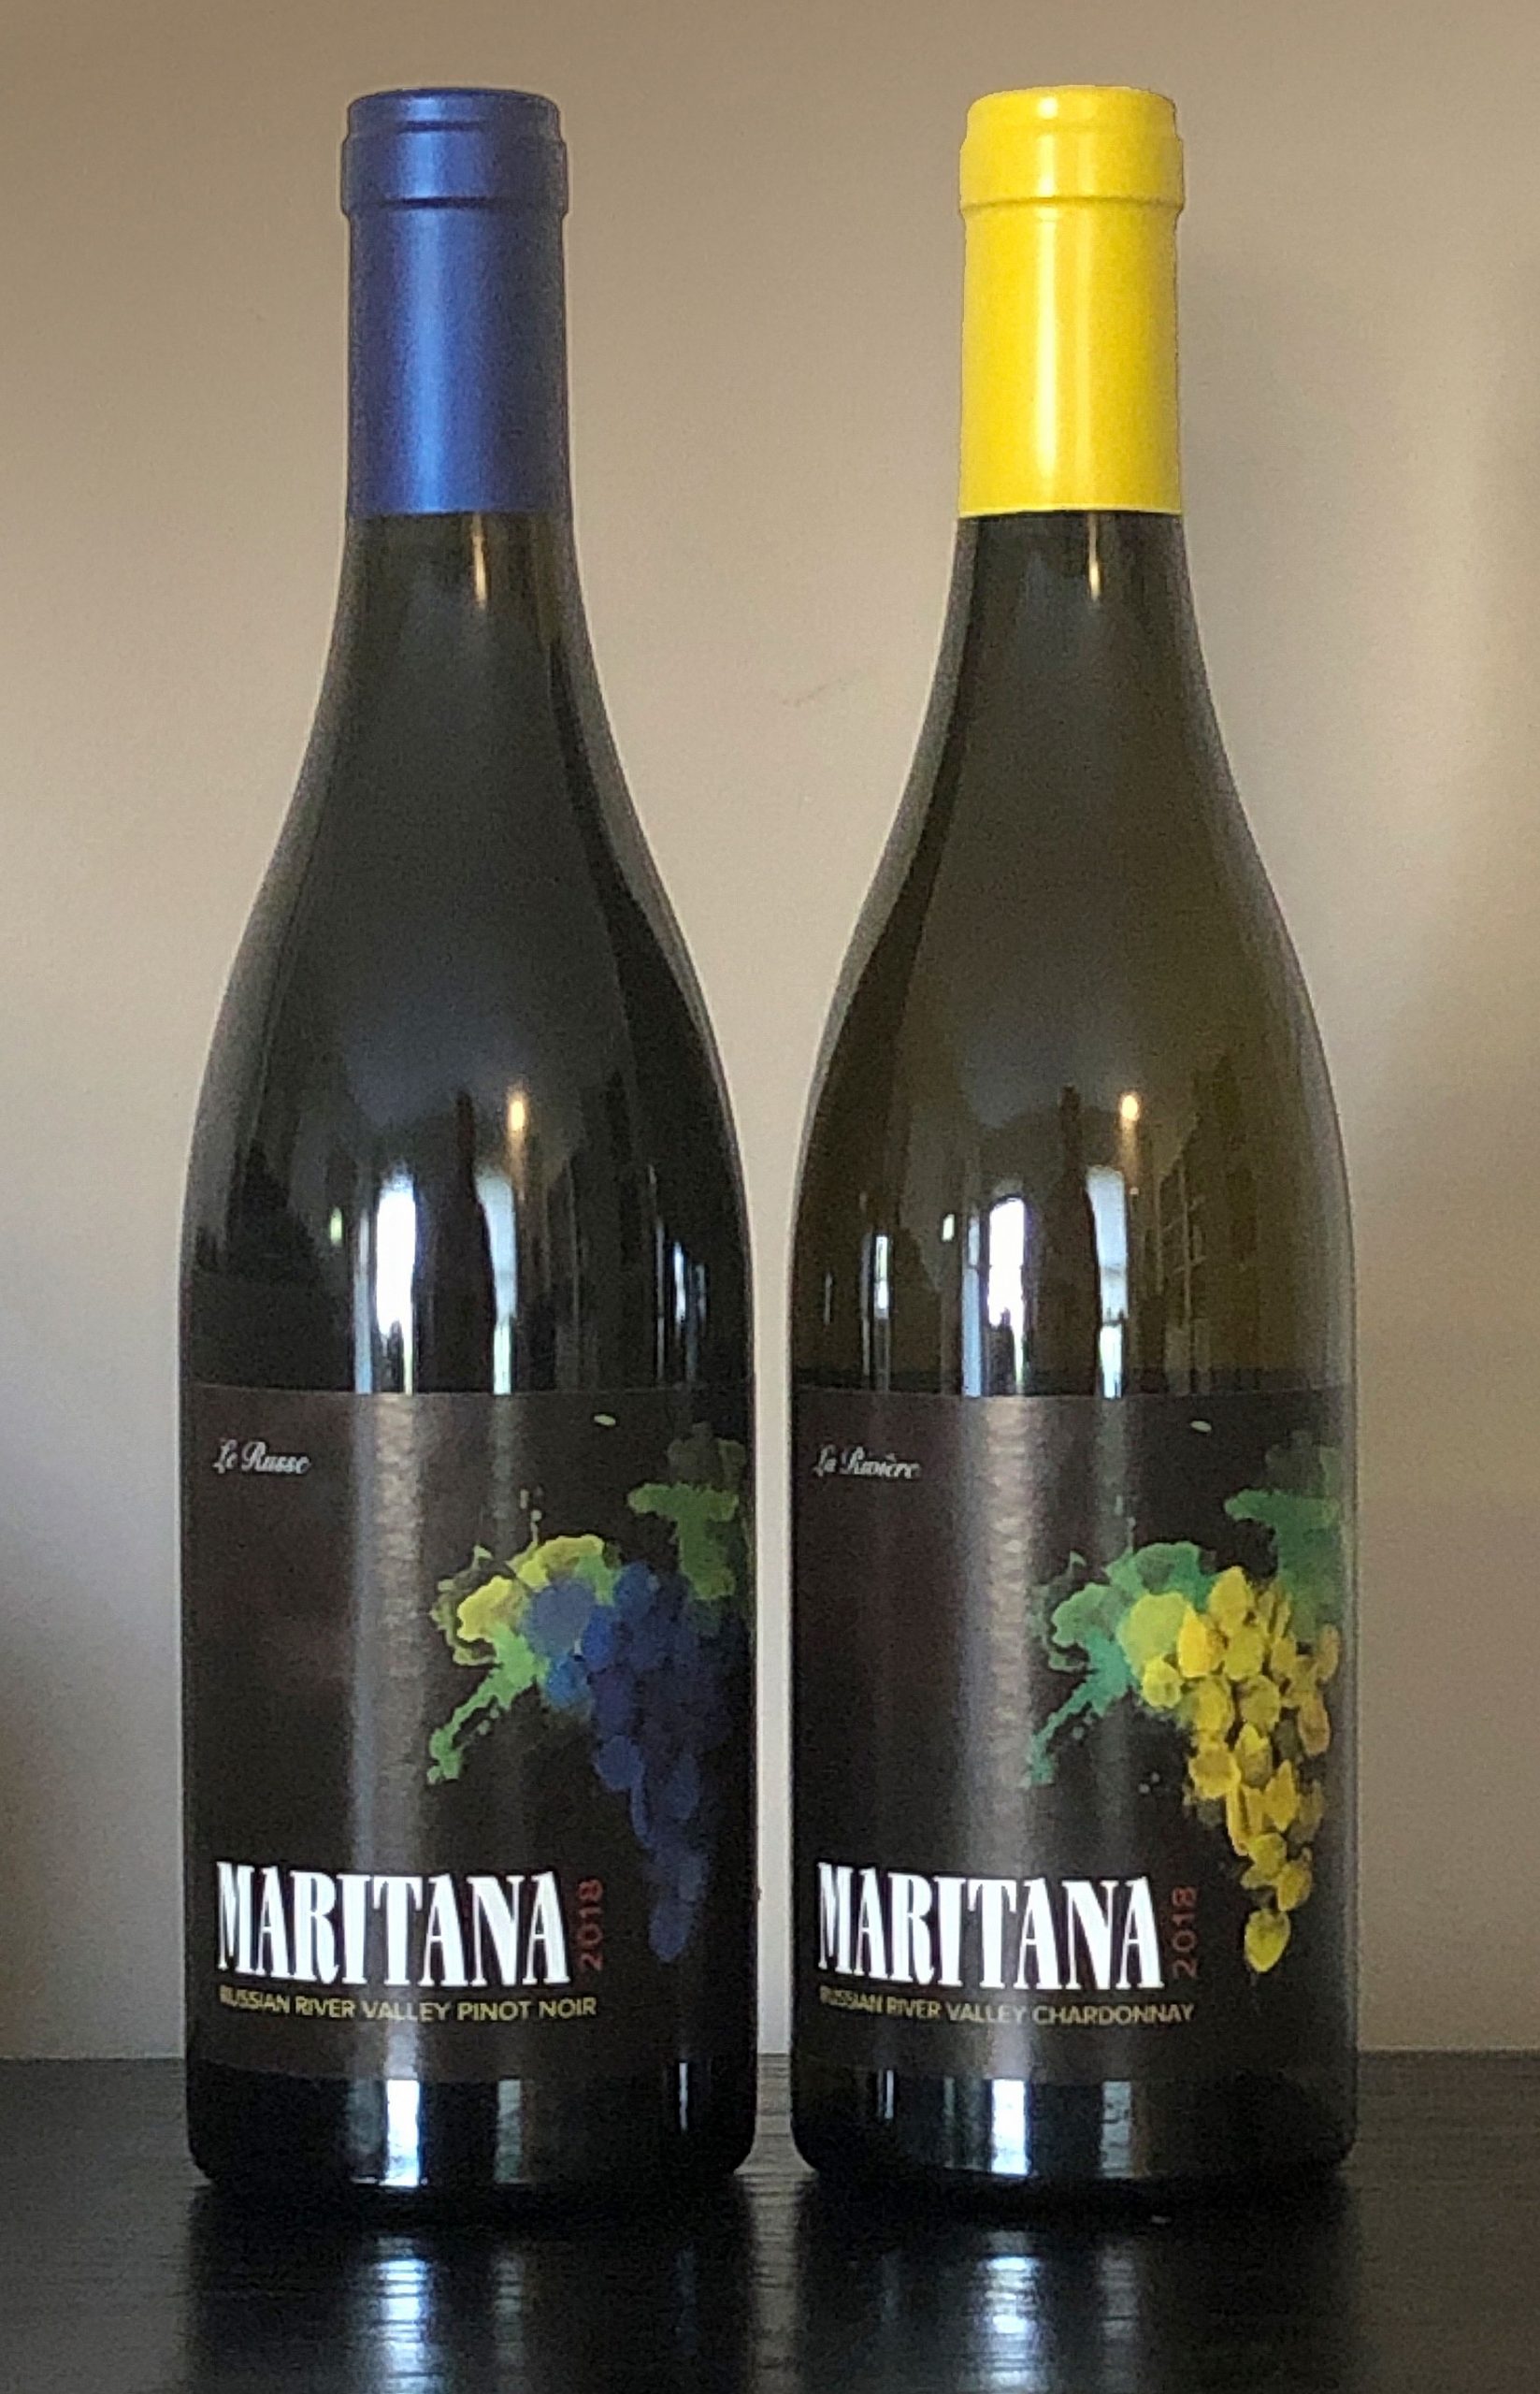 https://winervana.com/wp-content/uploads/2020/10/maritana-2-scaled.jpg